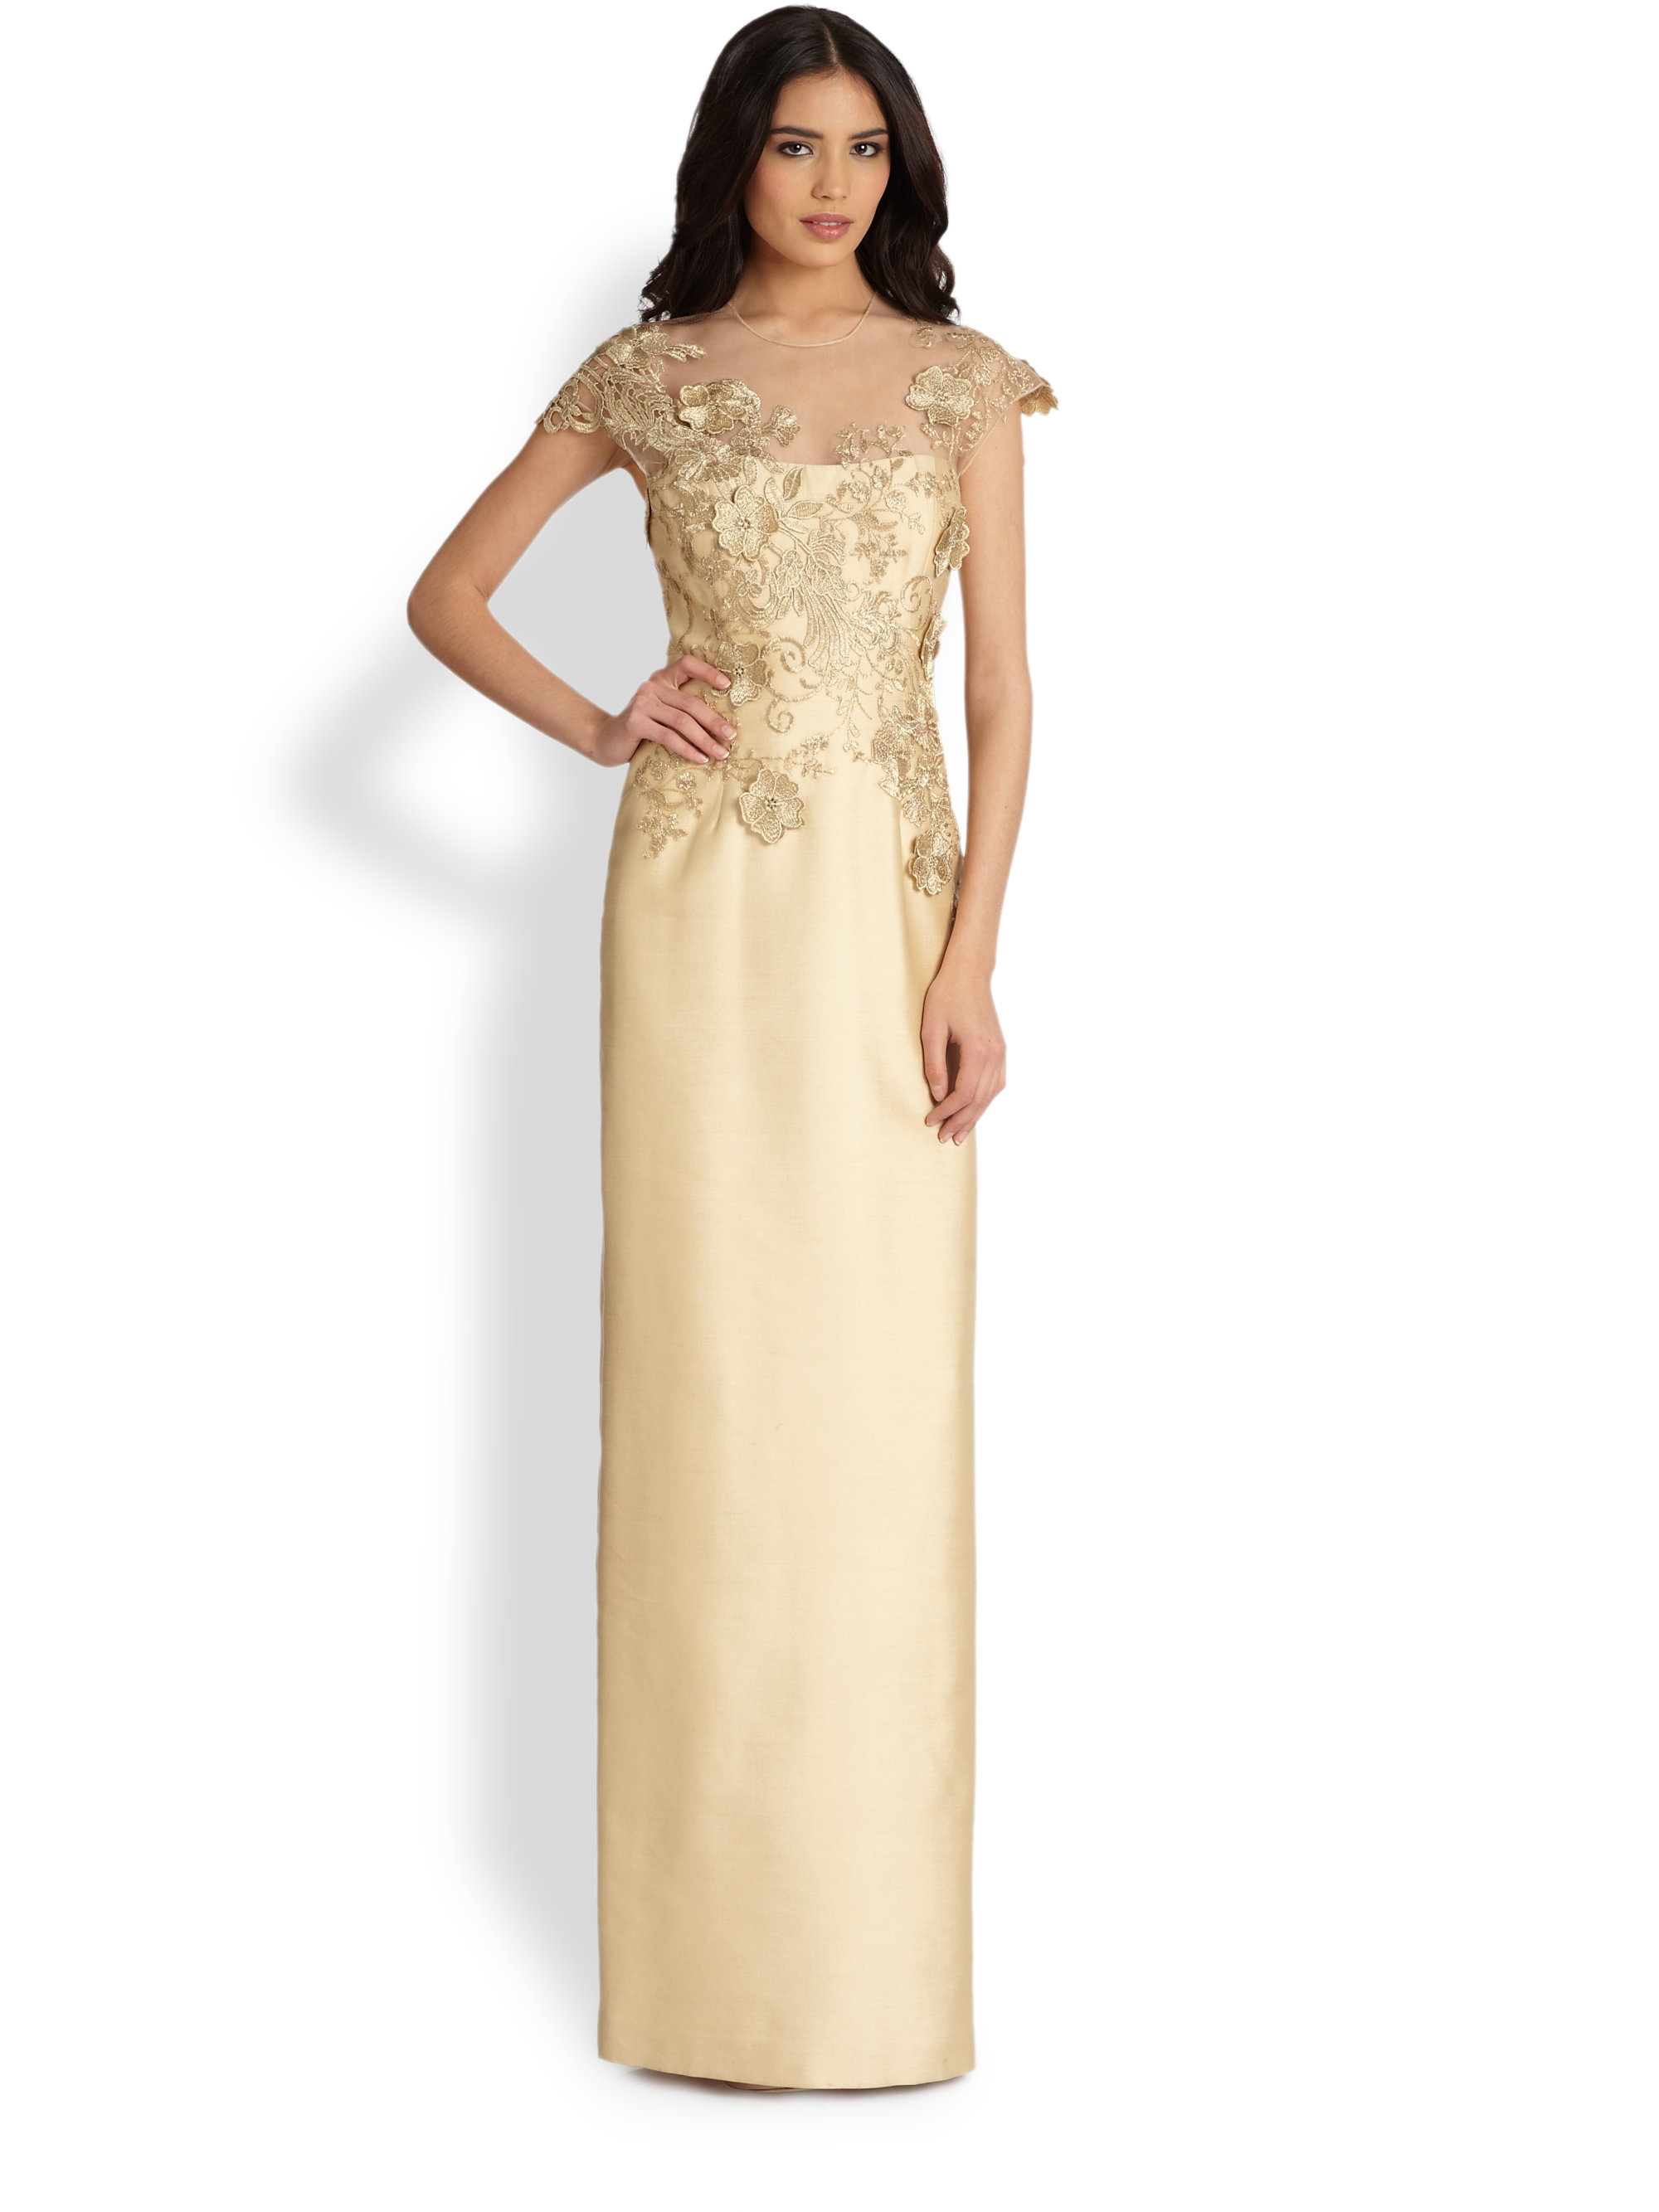 Saks Fifth Avenue Designer Gowns 2